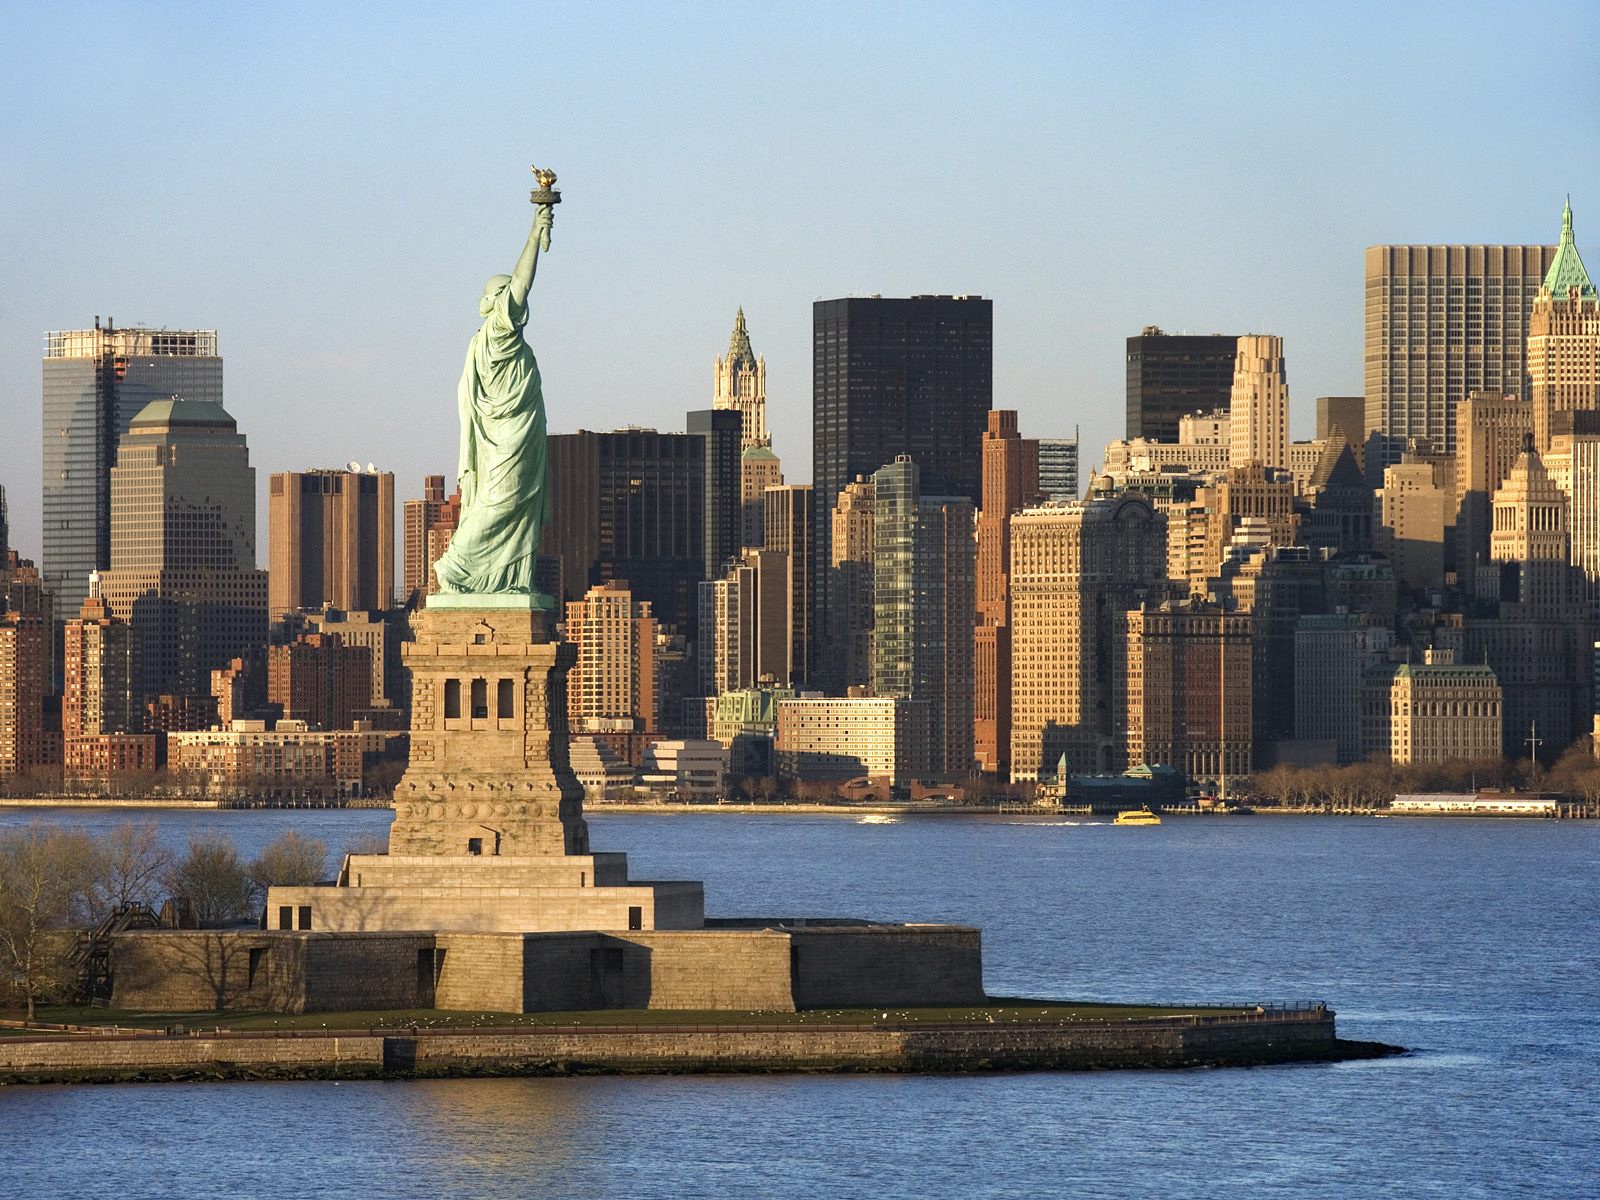 Statue+of+Liberty+in+New+York.jpg